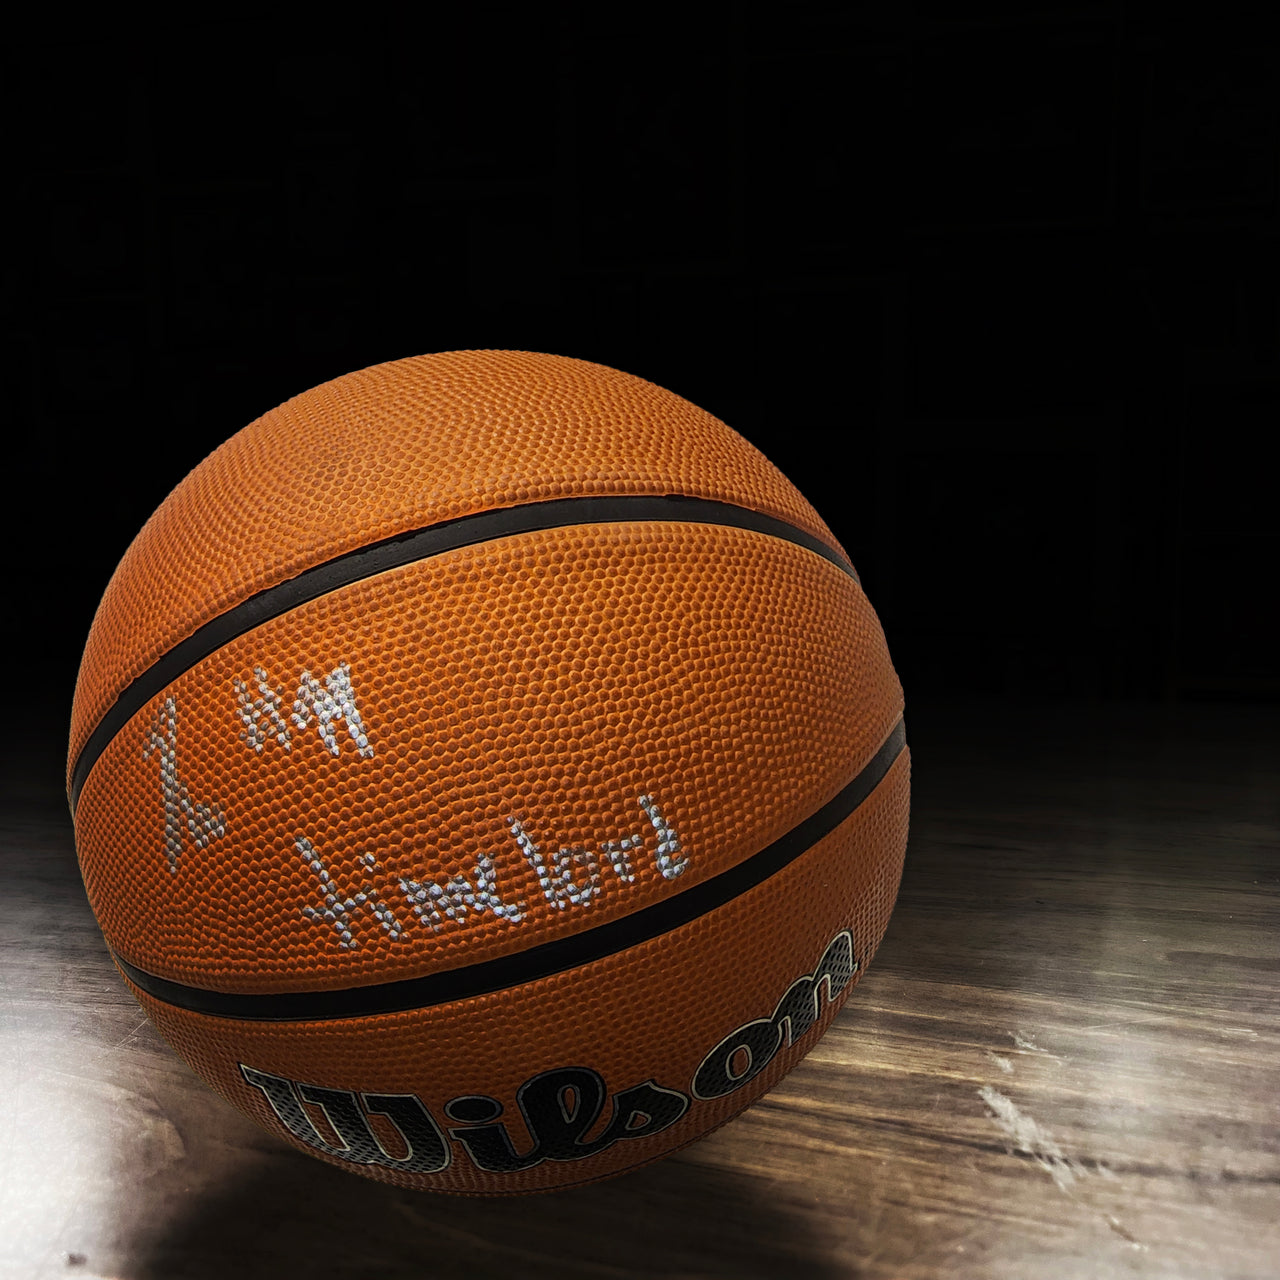 Robert Williams III Boston Celtics Autographed NBA Wilson Basketball Inscribed "Time Lord" - Dynasty Sports & Framing 